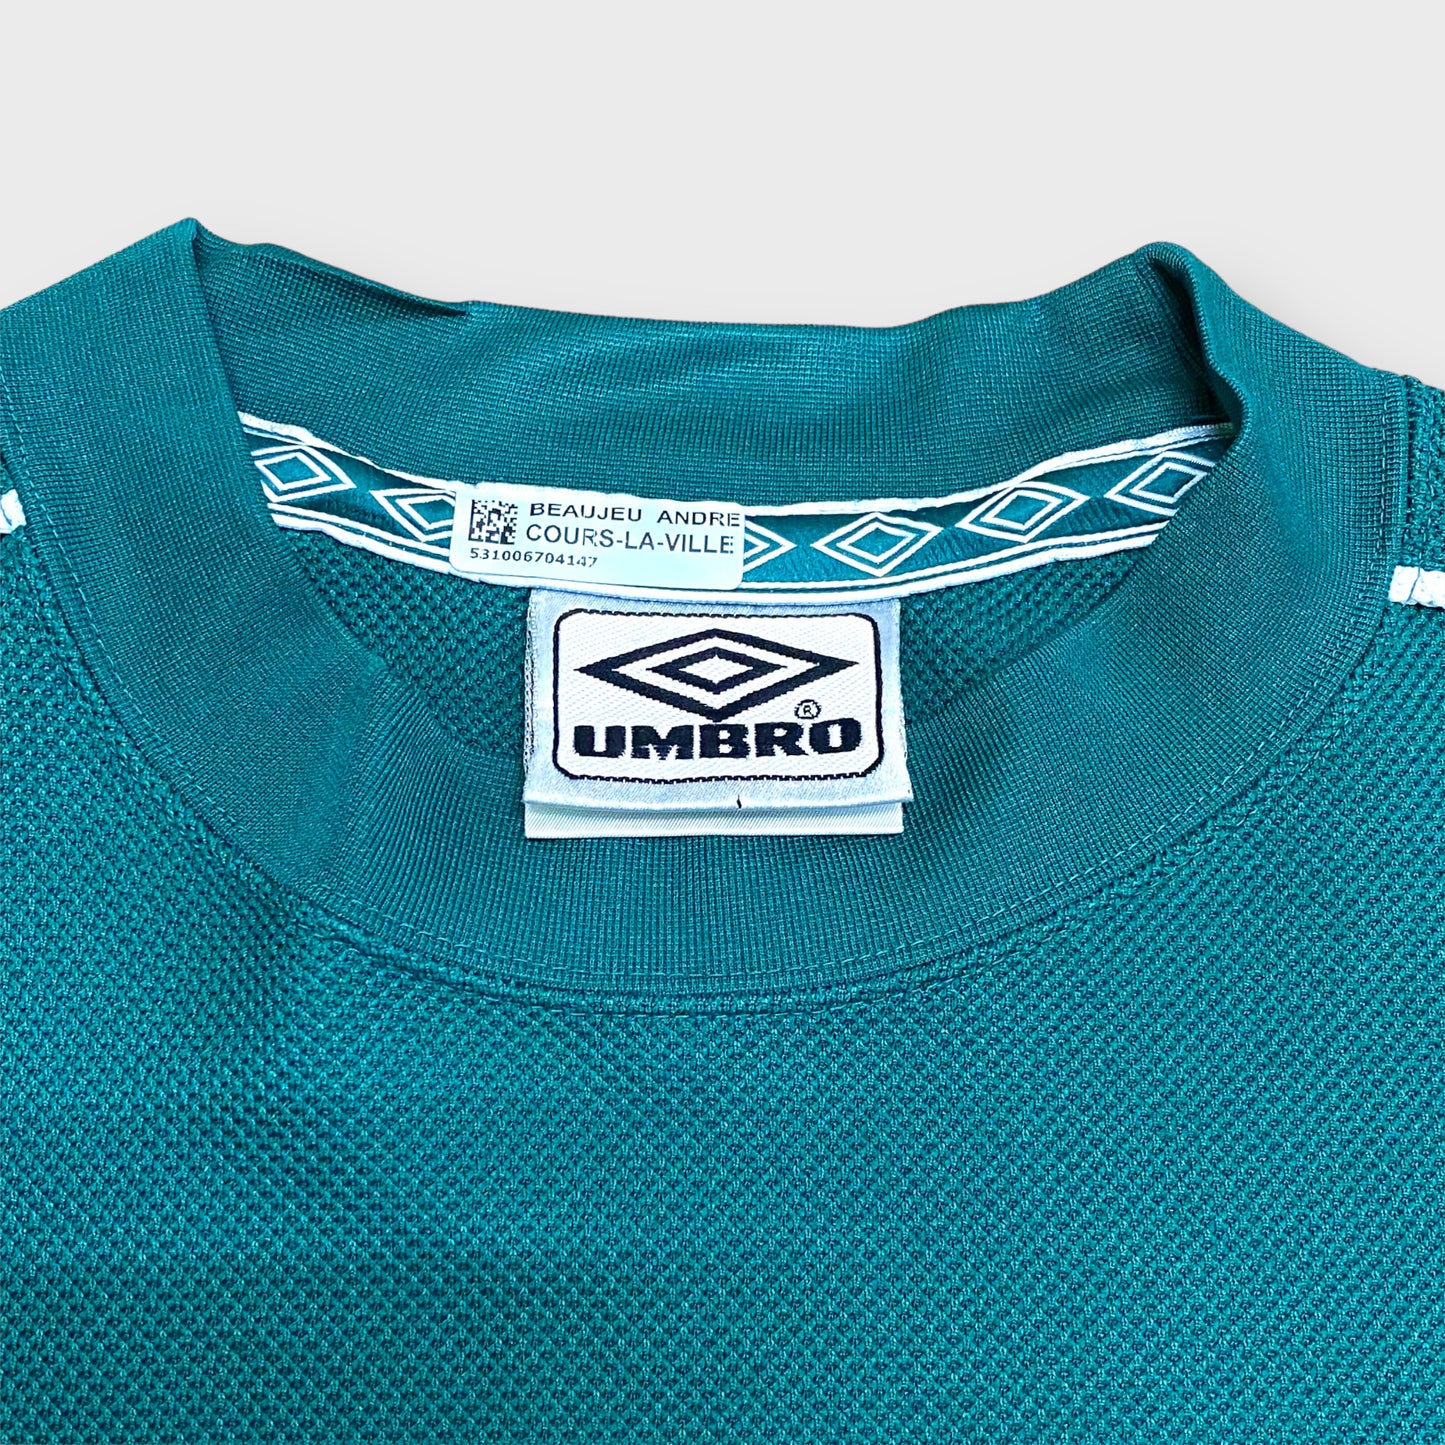 00’s "UMBRO" Polyester l/s shirt